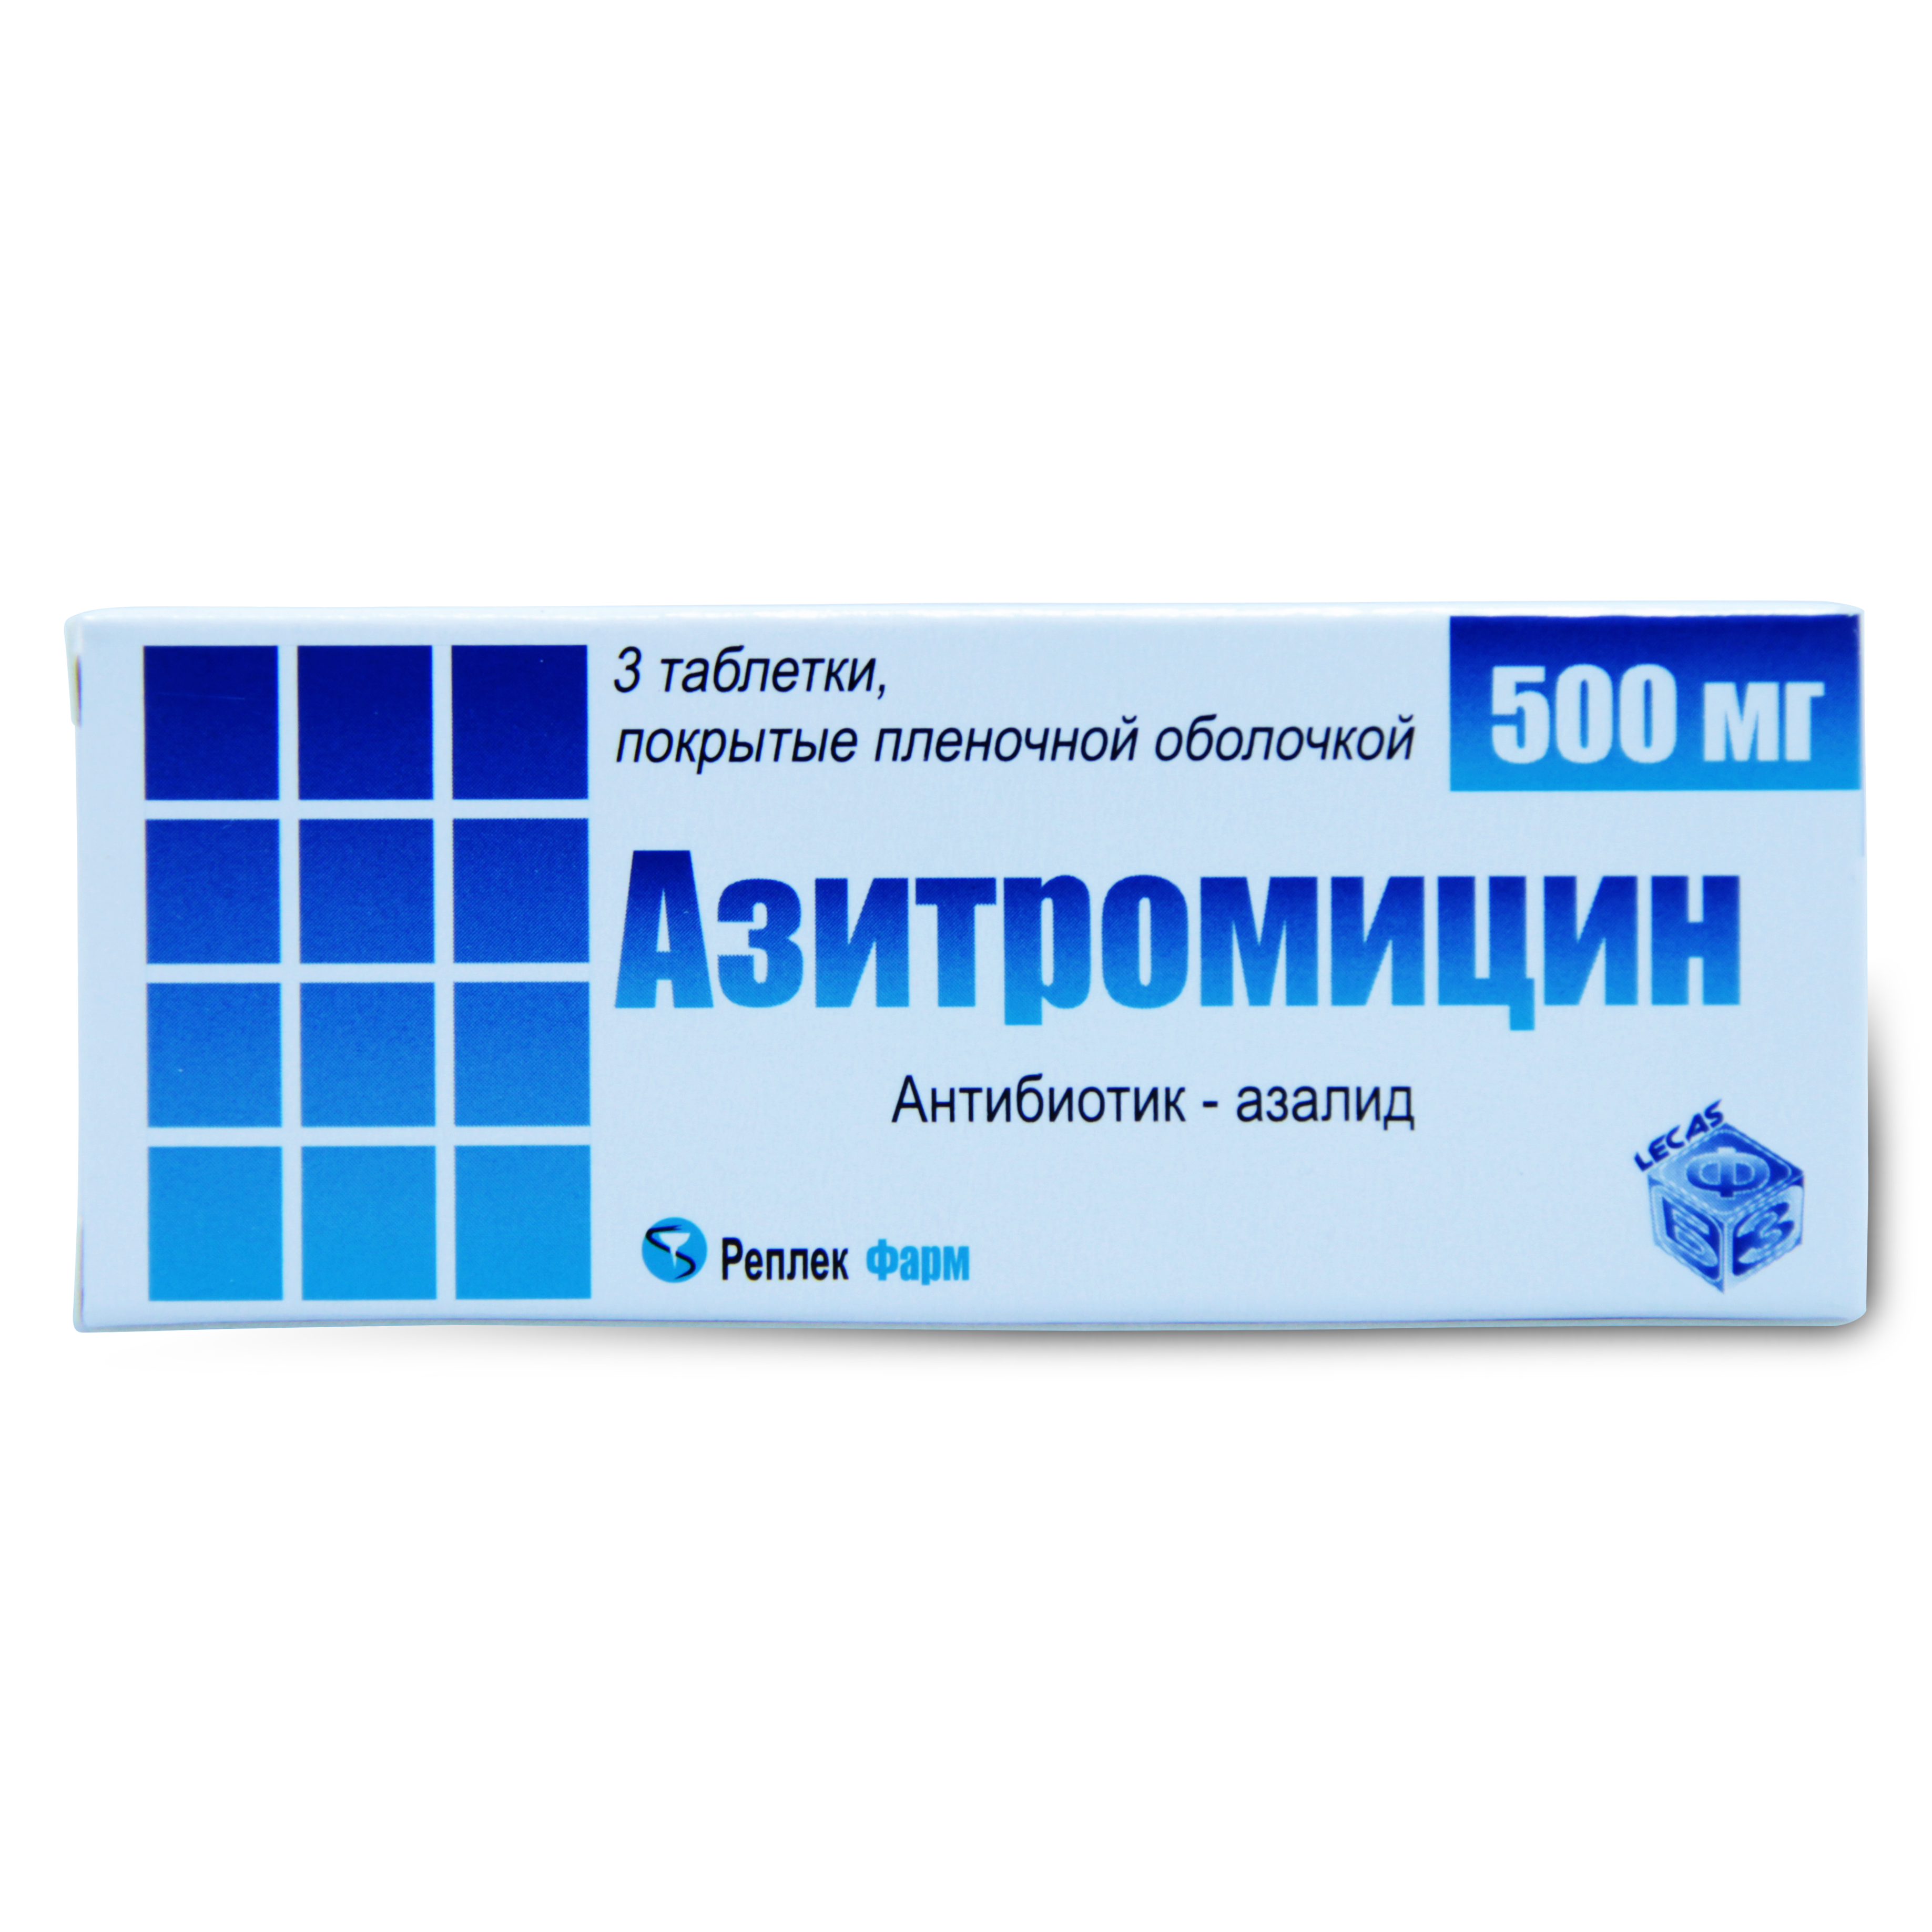 Азитромицин таблетки покрытые пленочной оболочкой 500 мг 3 шт.